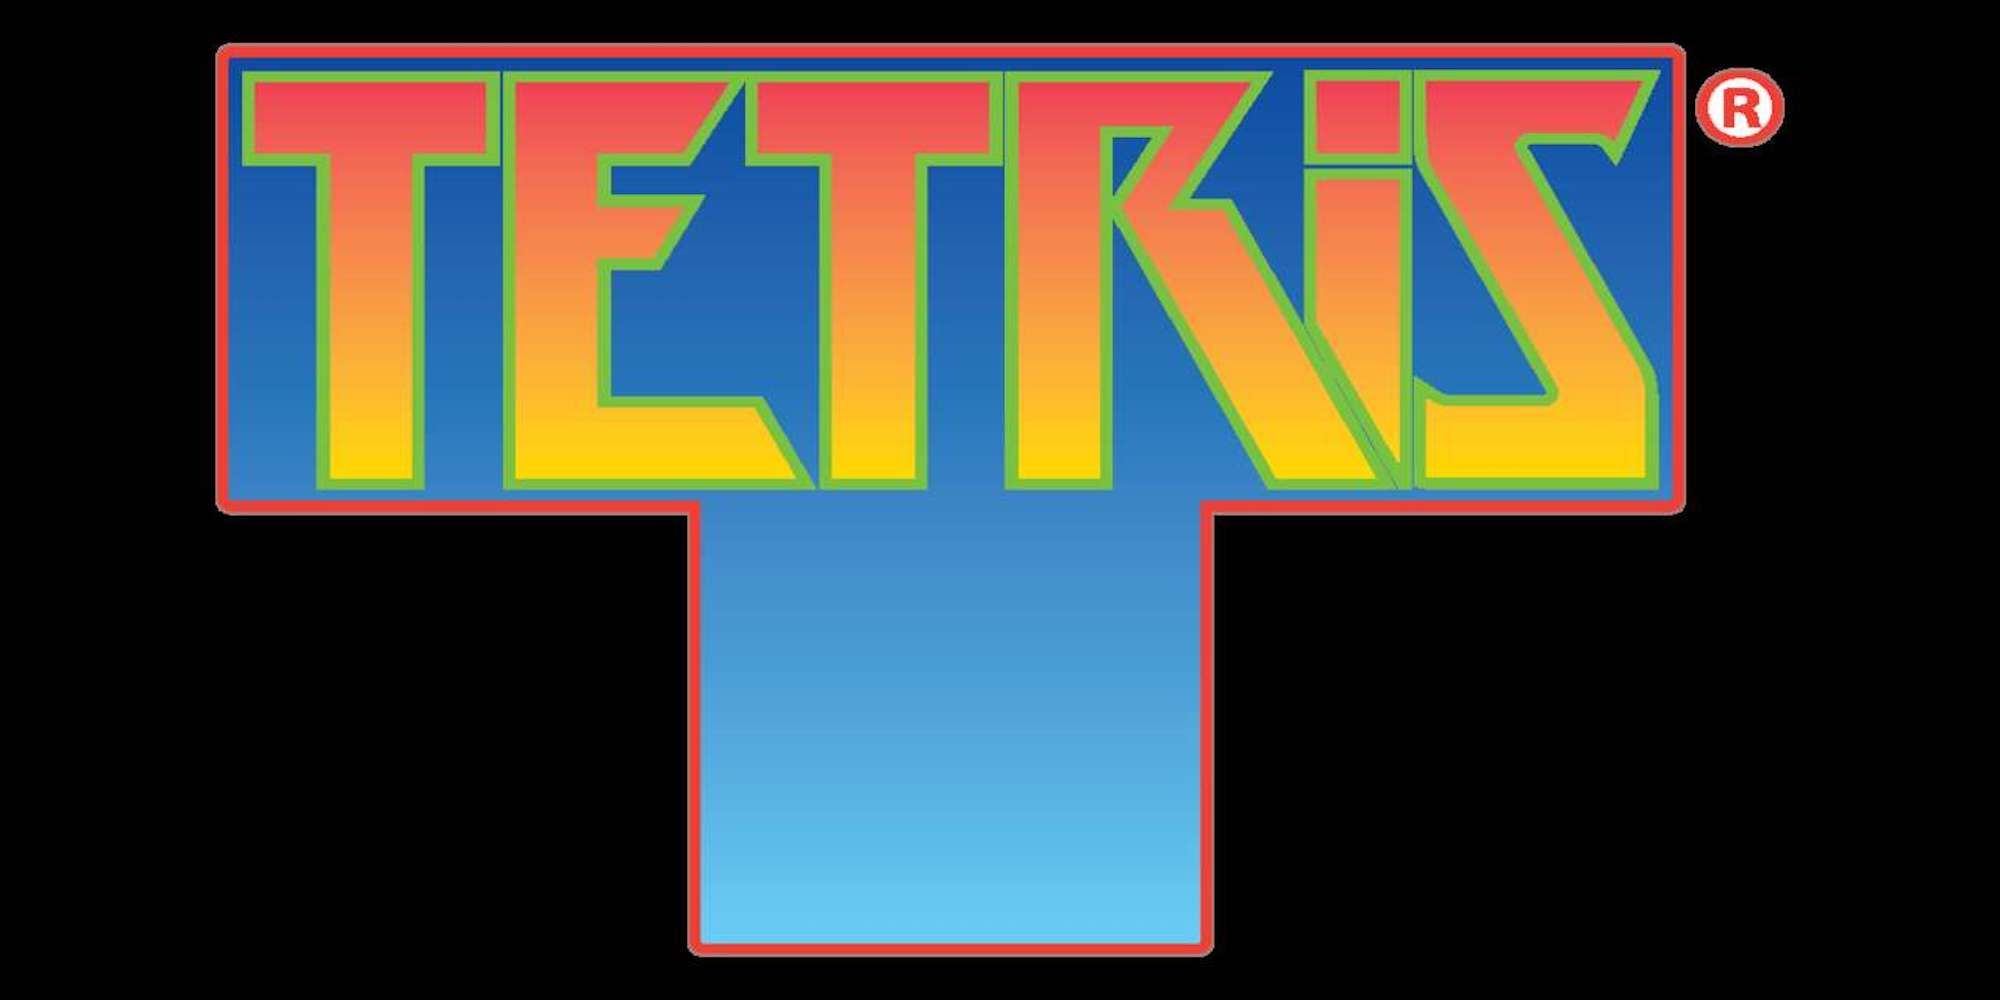 An orange and blue version of the Tetris logo